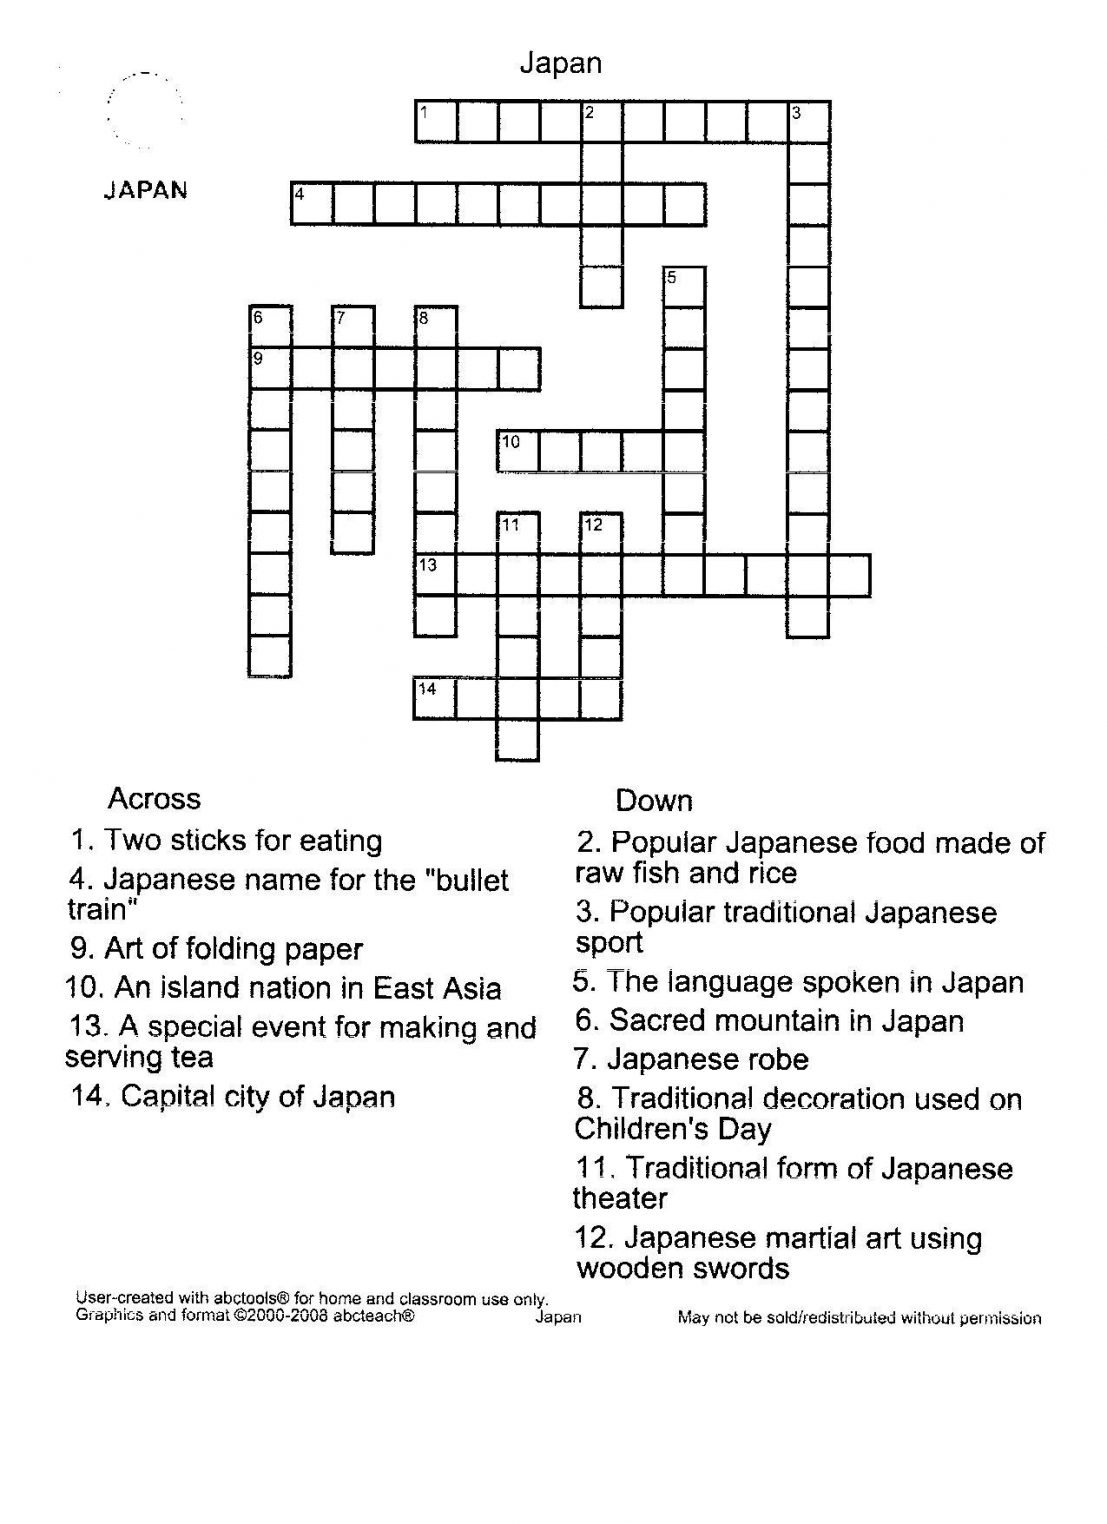 Free Crossword Puzzle Maker Printable | Free Printables - Free Crossword Puzzle Maker Printable 50 Words